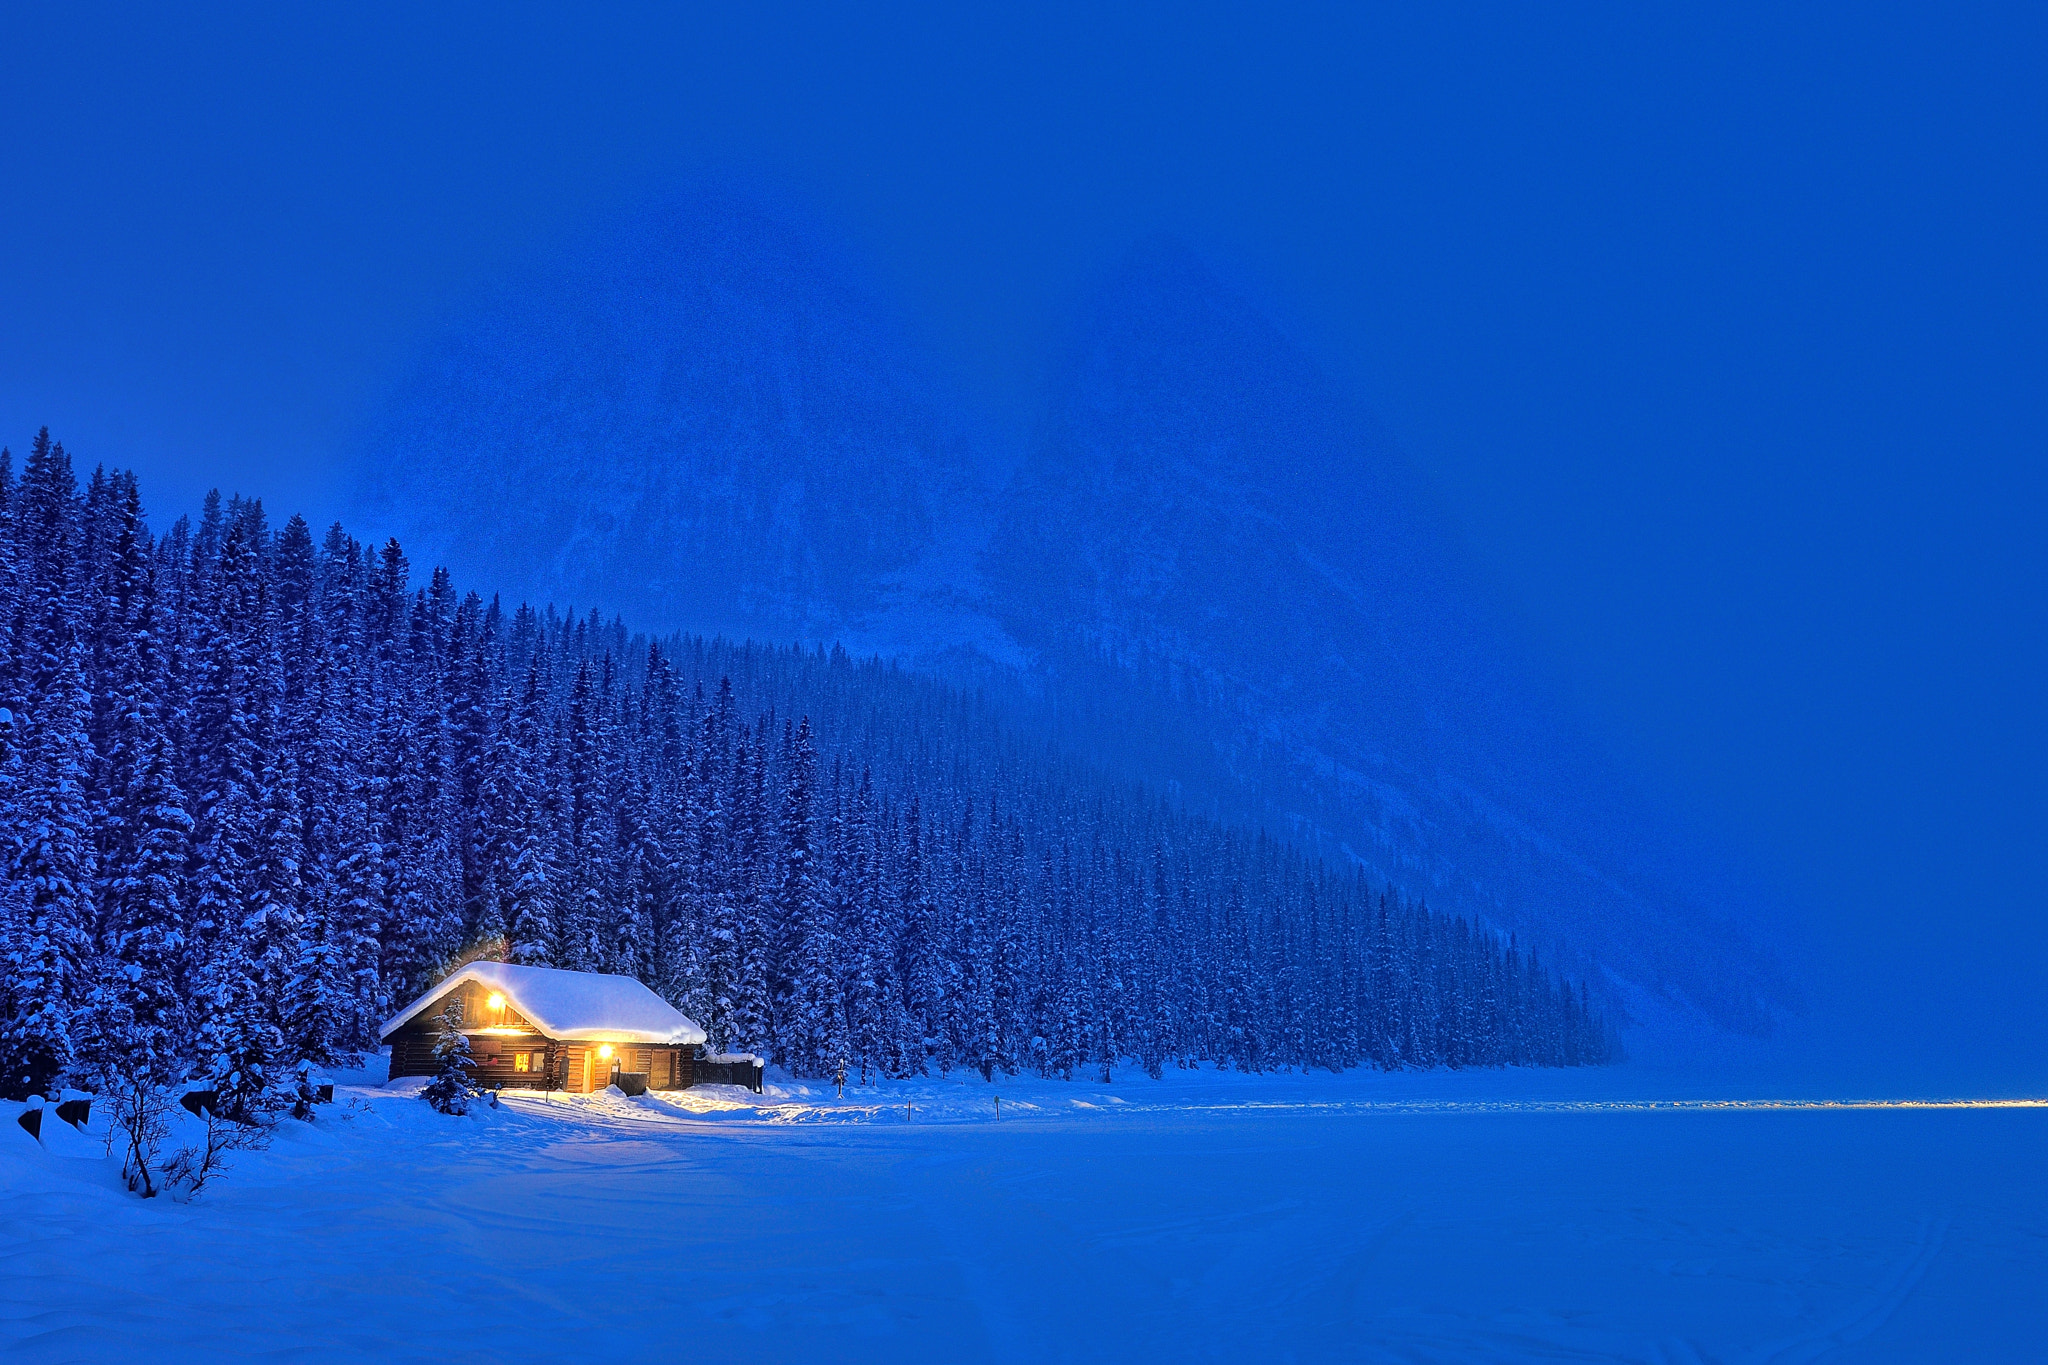 Wallpapers Lake Louise Banff National Park winter on the desktop